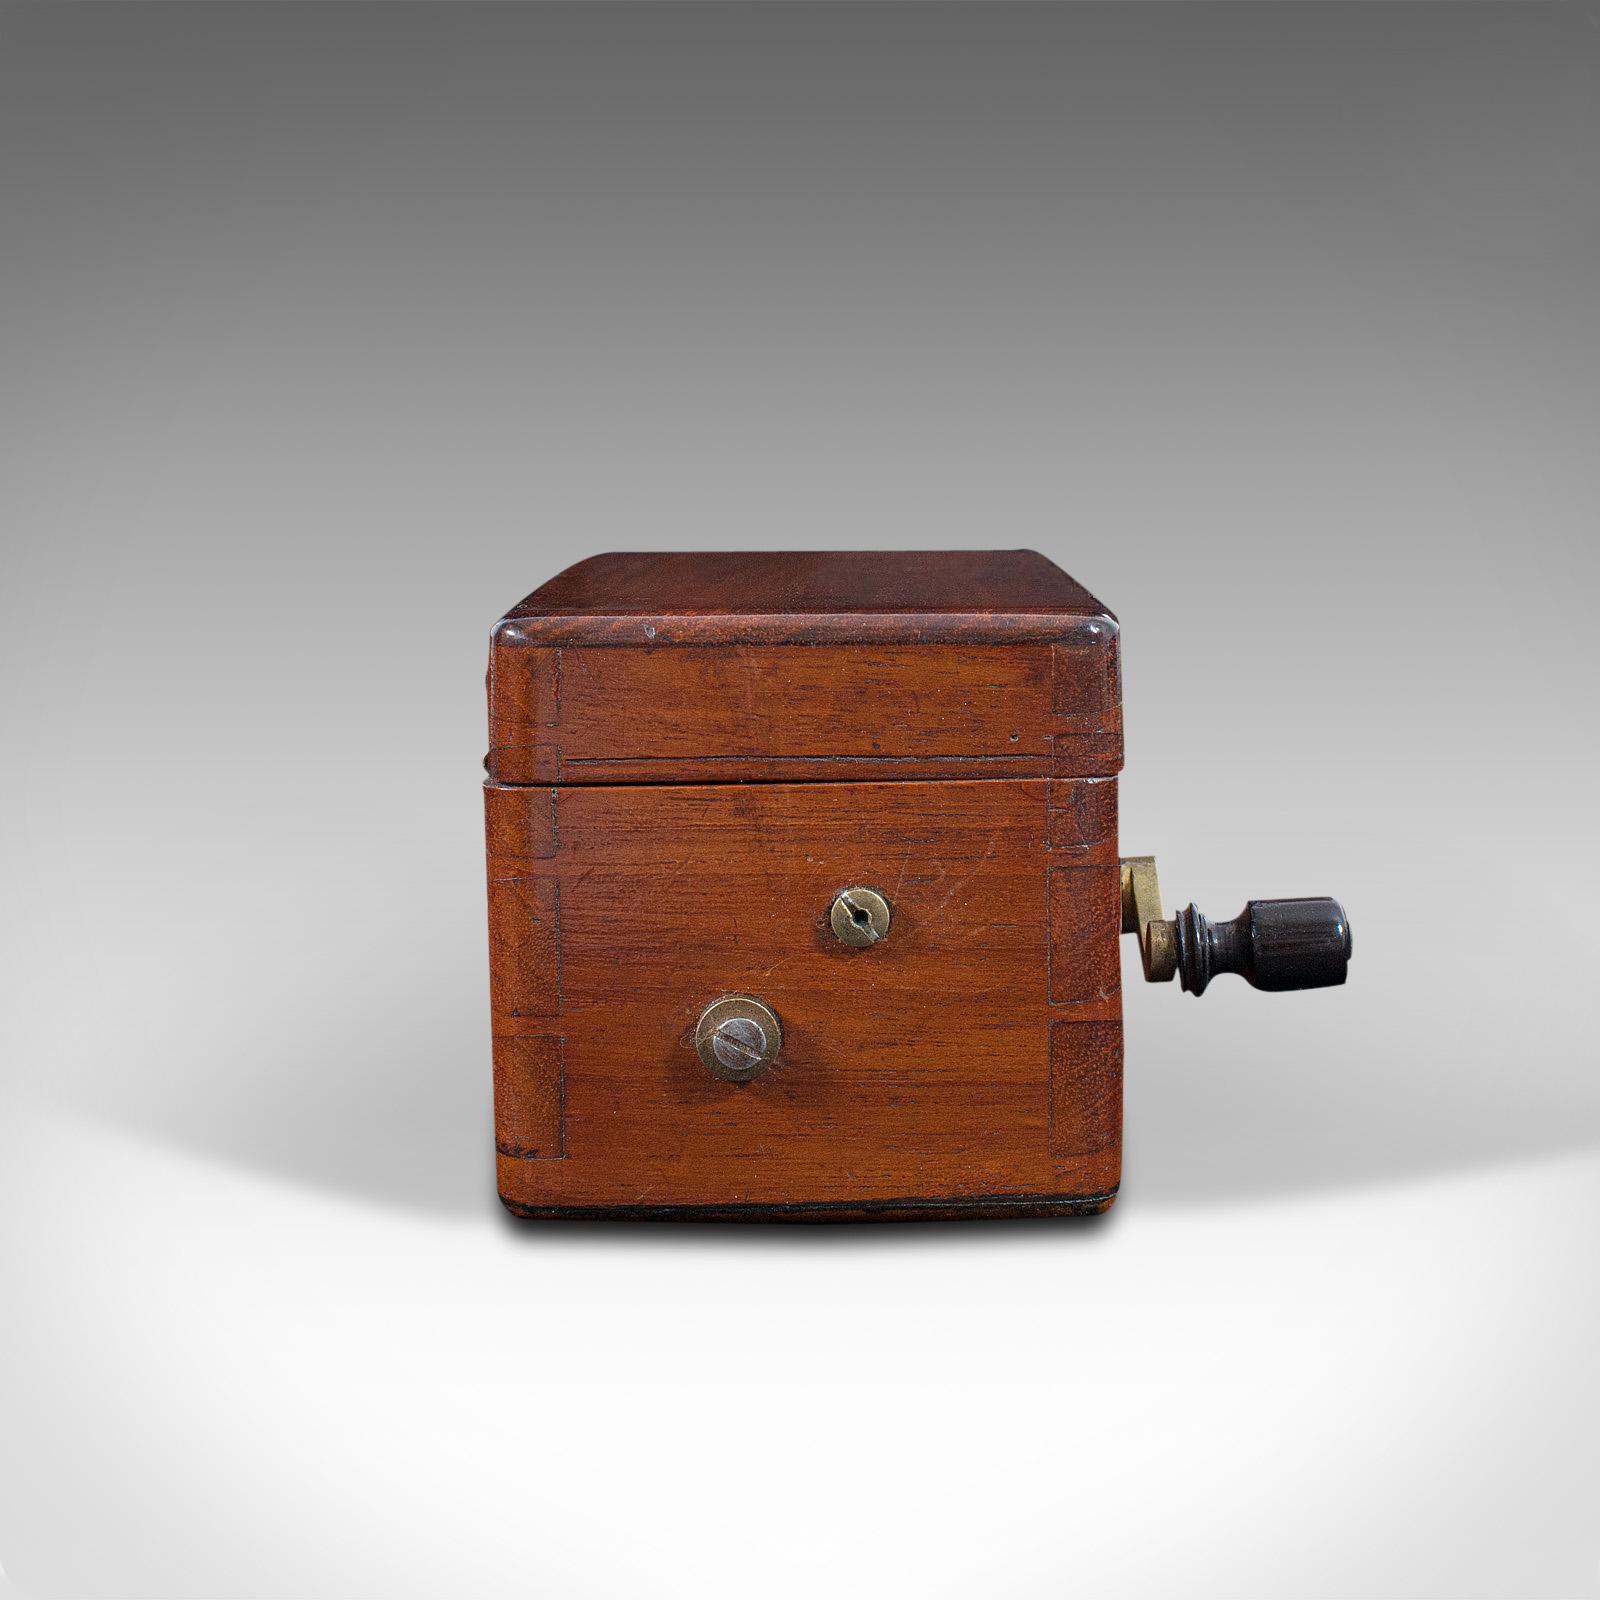 British Small Antique Electric Therapy Machine, English, Scientific, Medical, Victorian